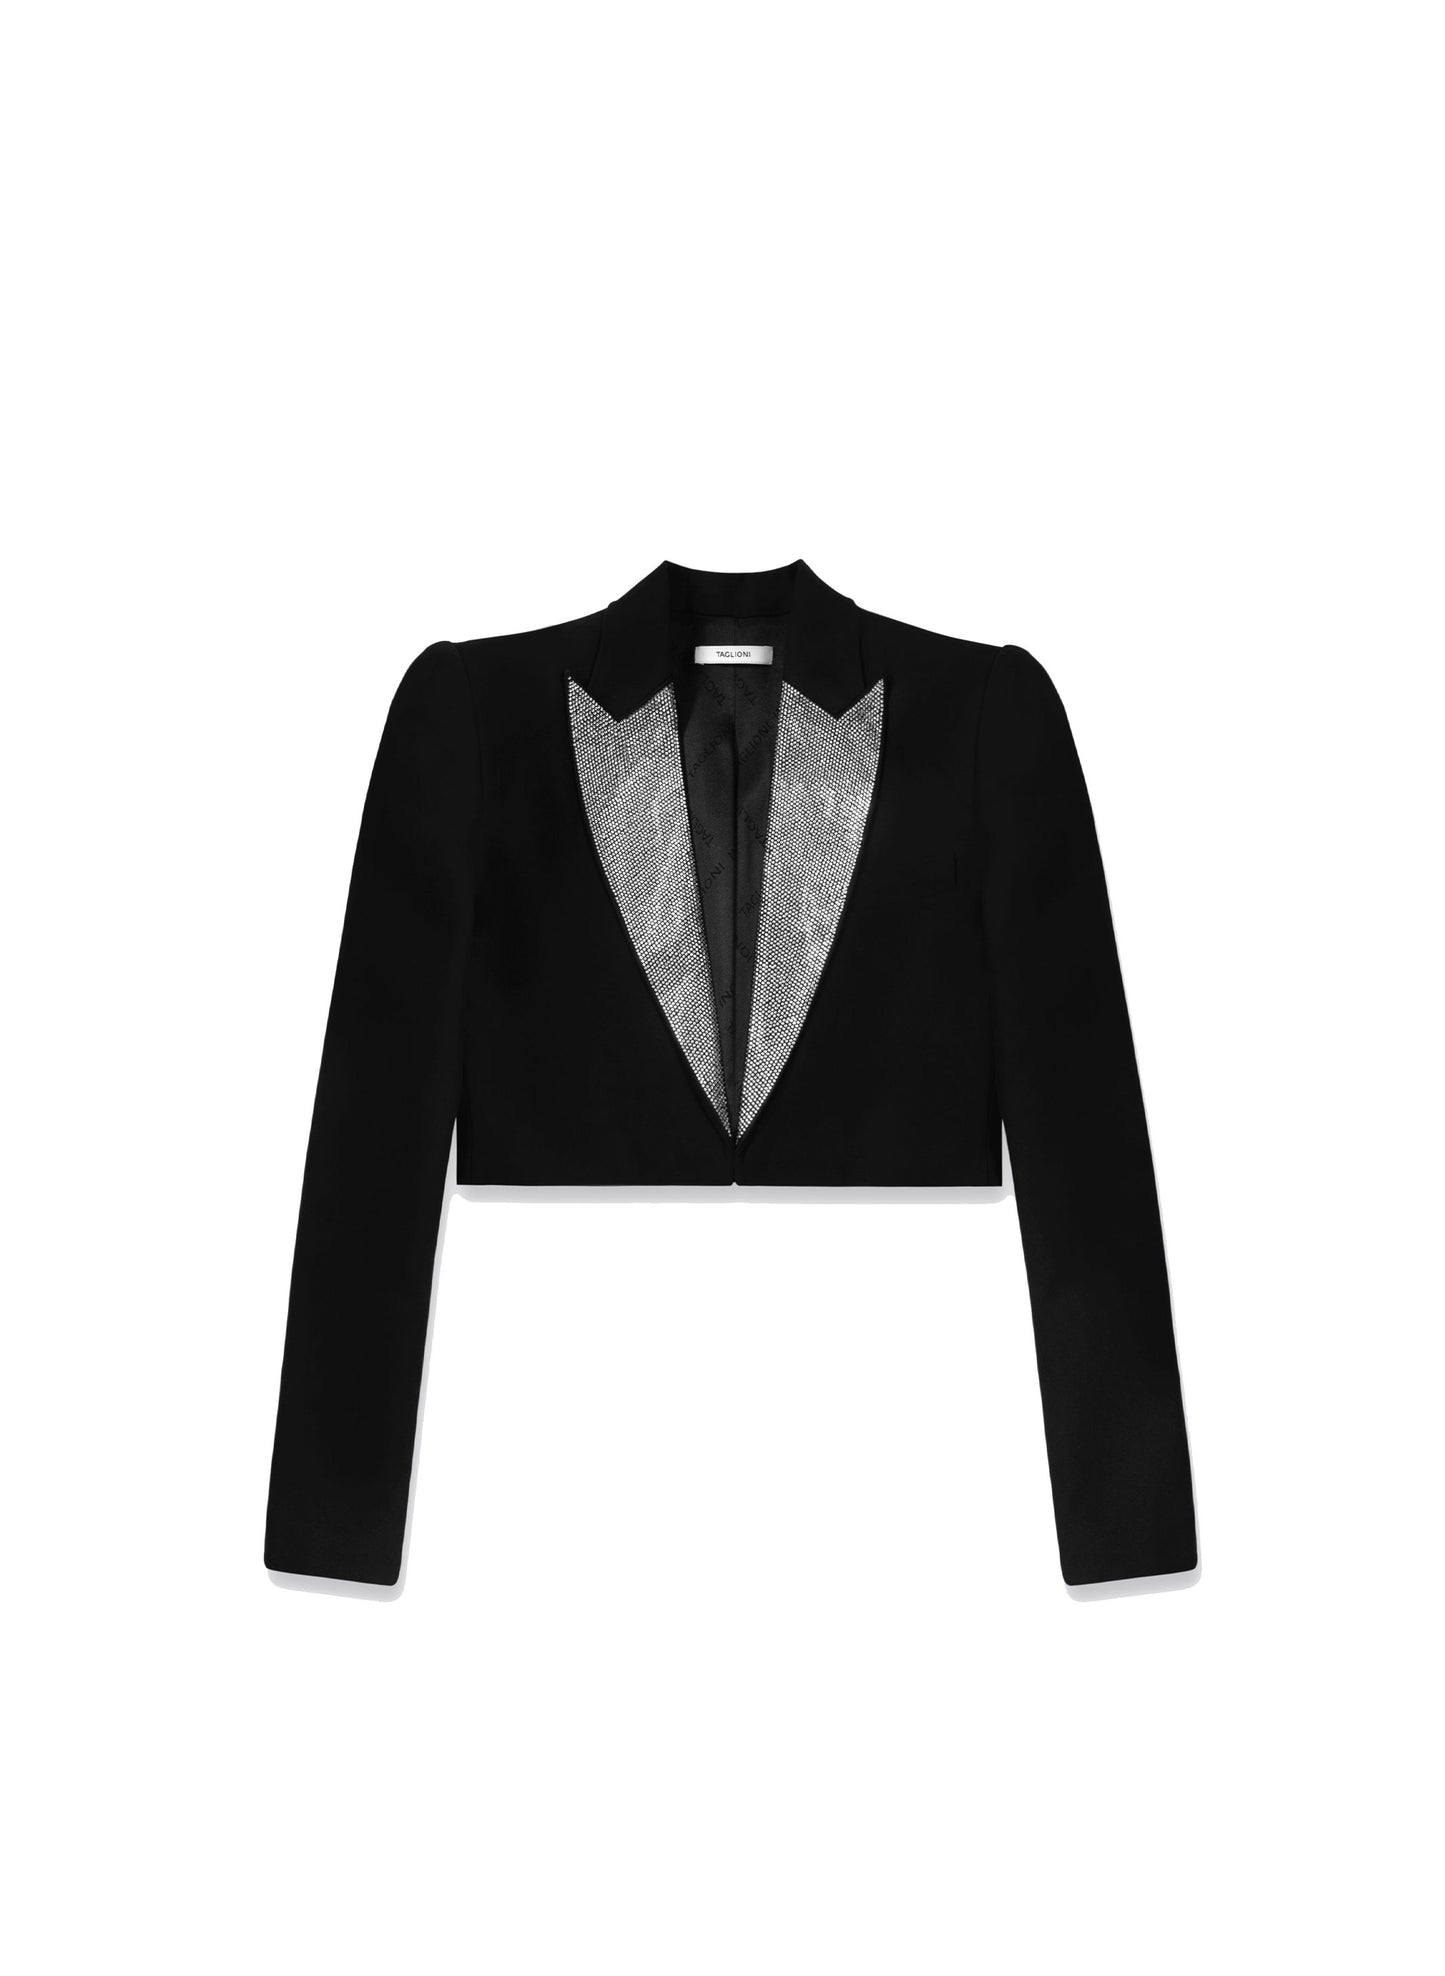 TAGLIONI Short Rhinestone Suit Jacket in Black